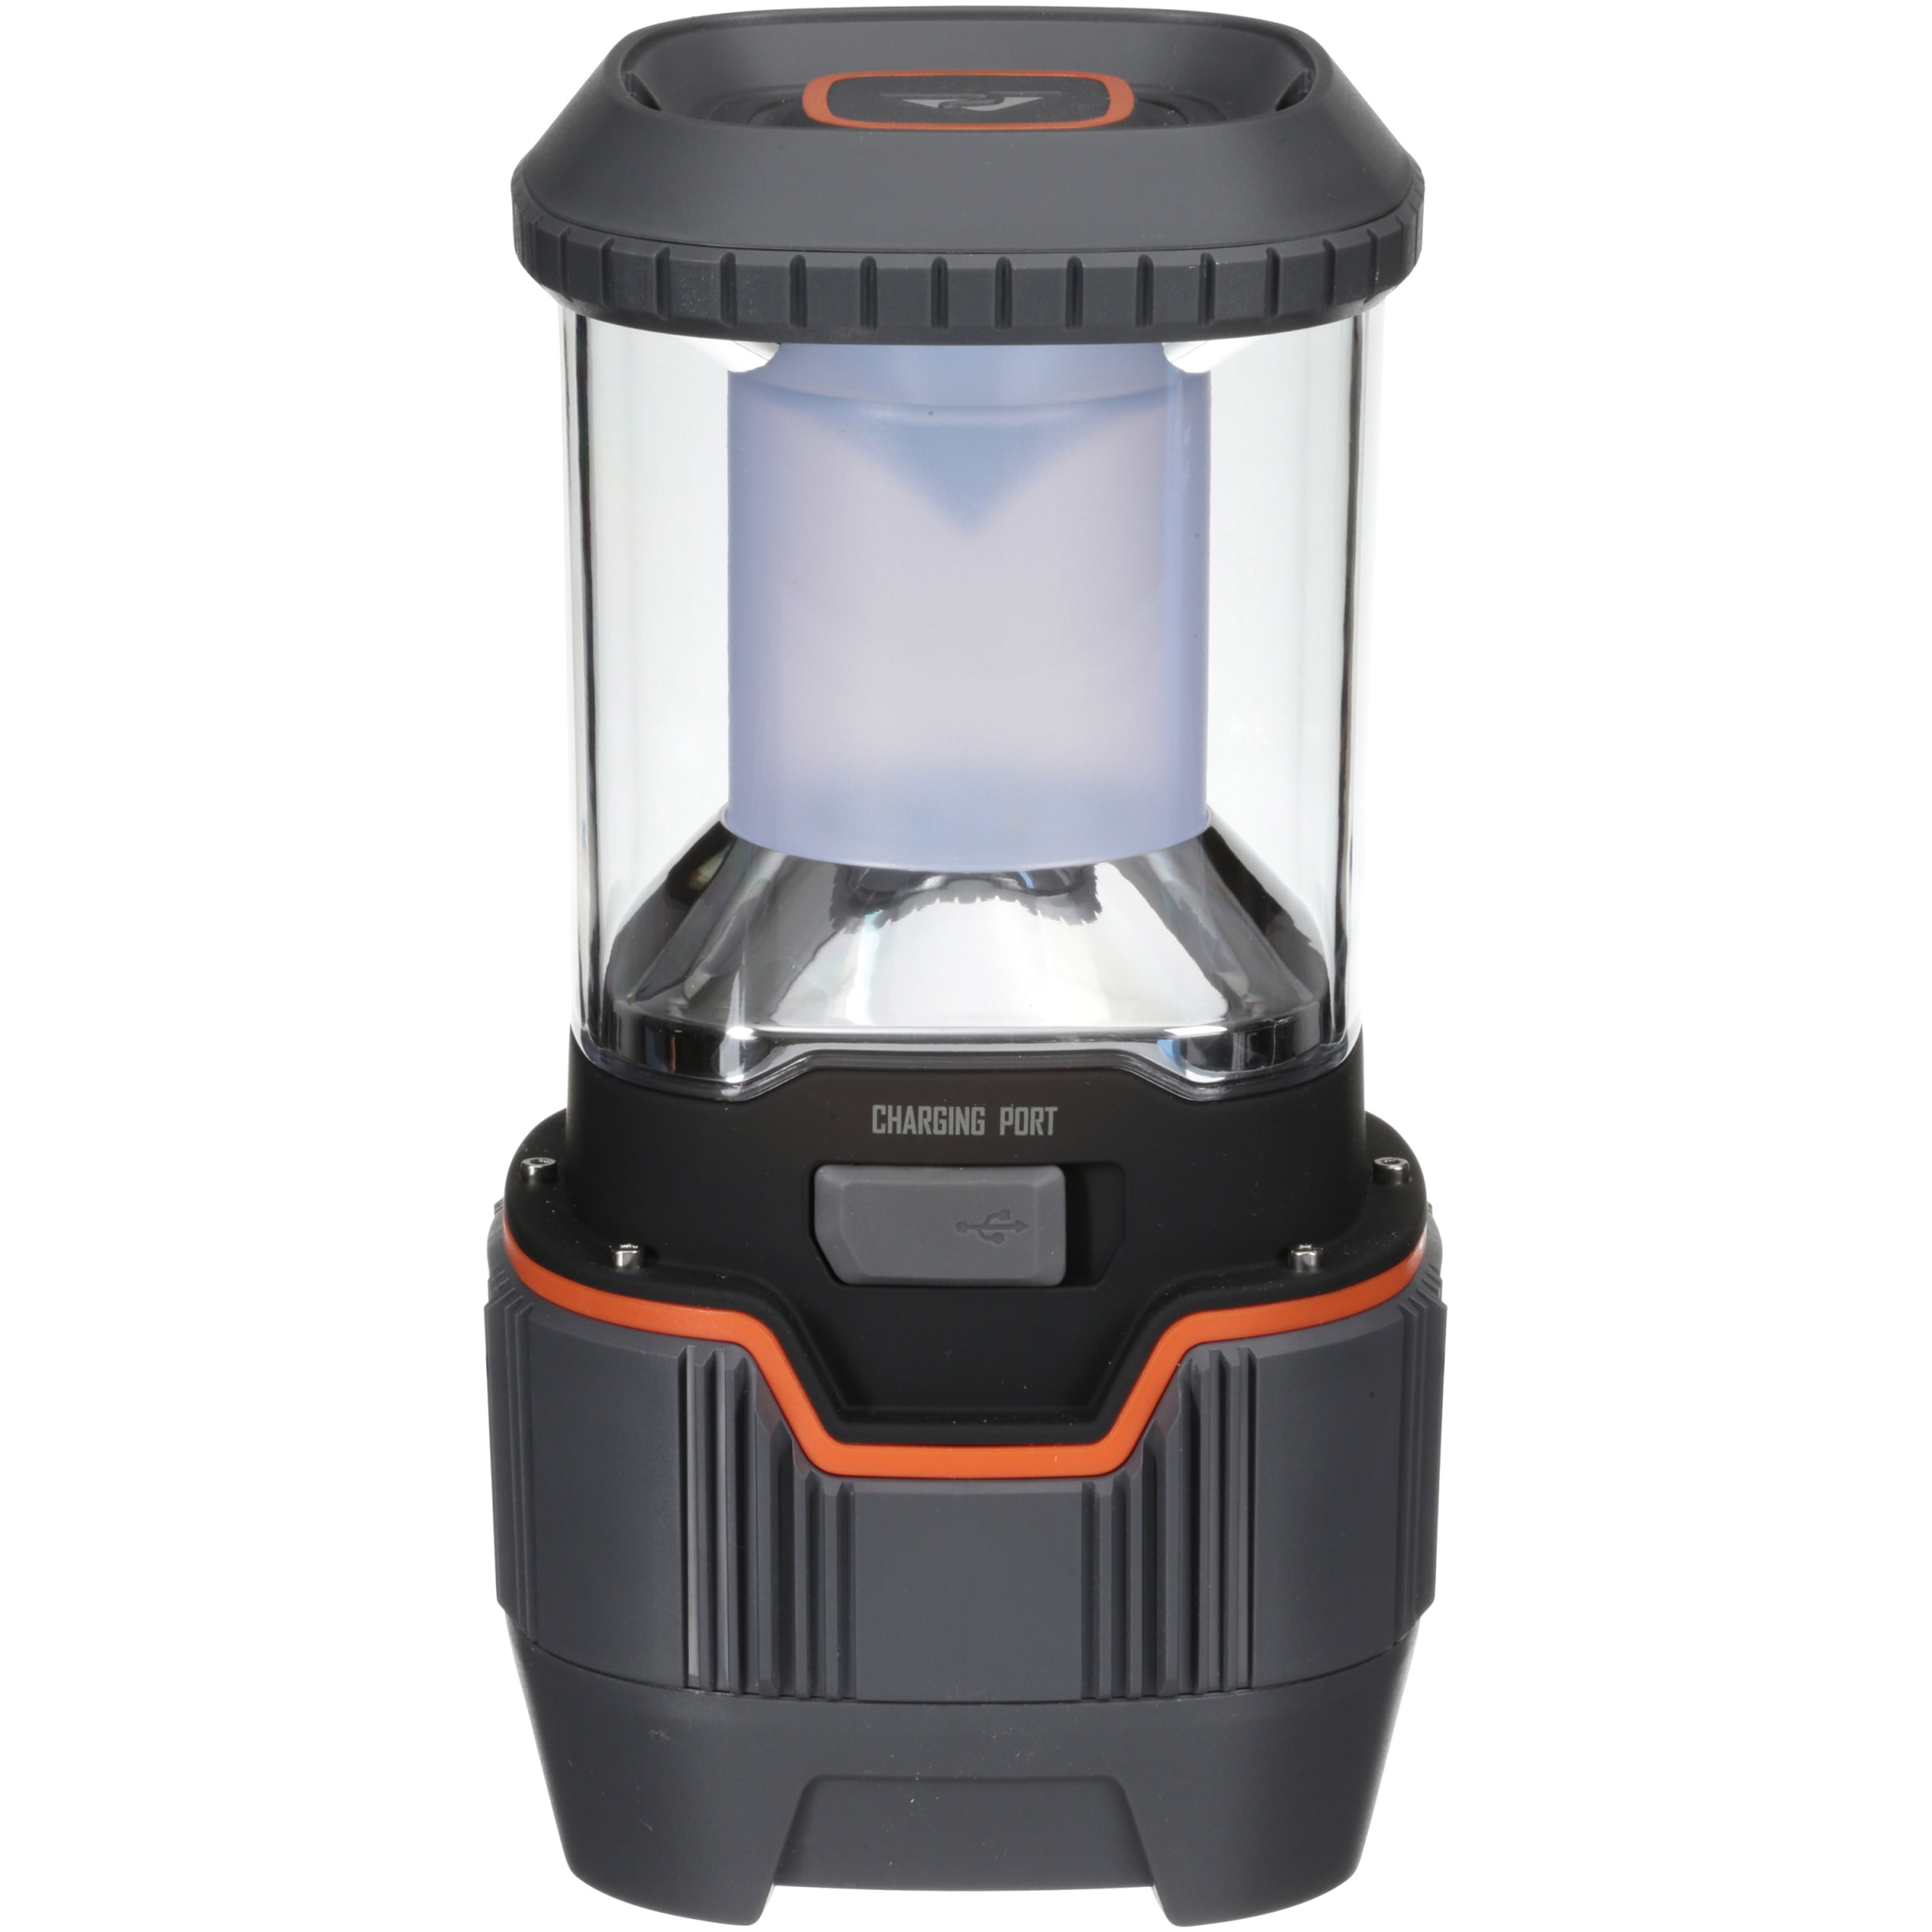 Ozark Trail Rechargeable LED Lantern Just $19.97 on Walmart.com